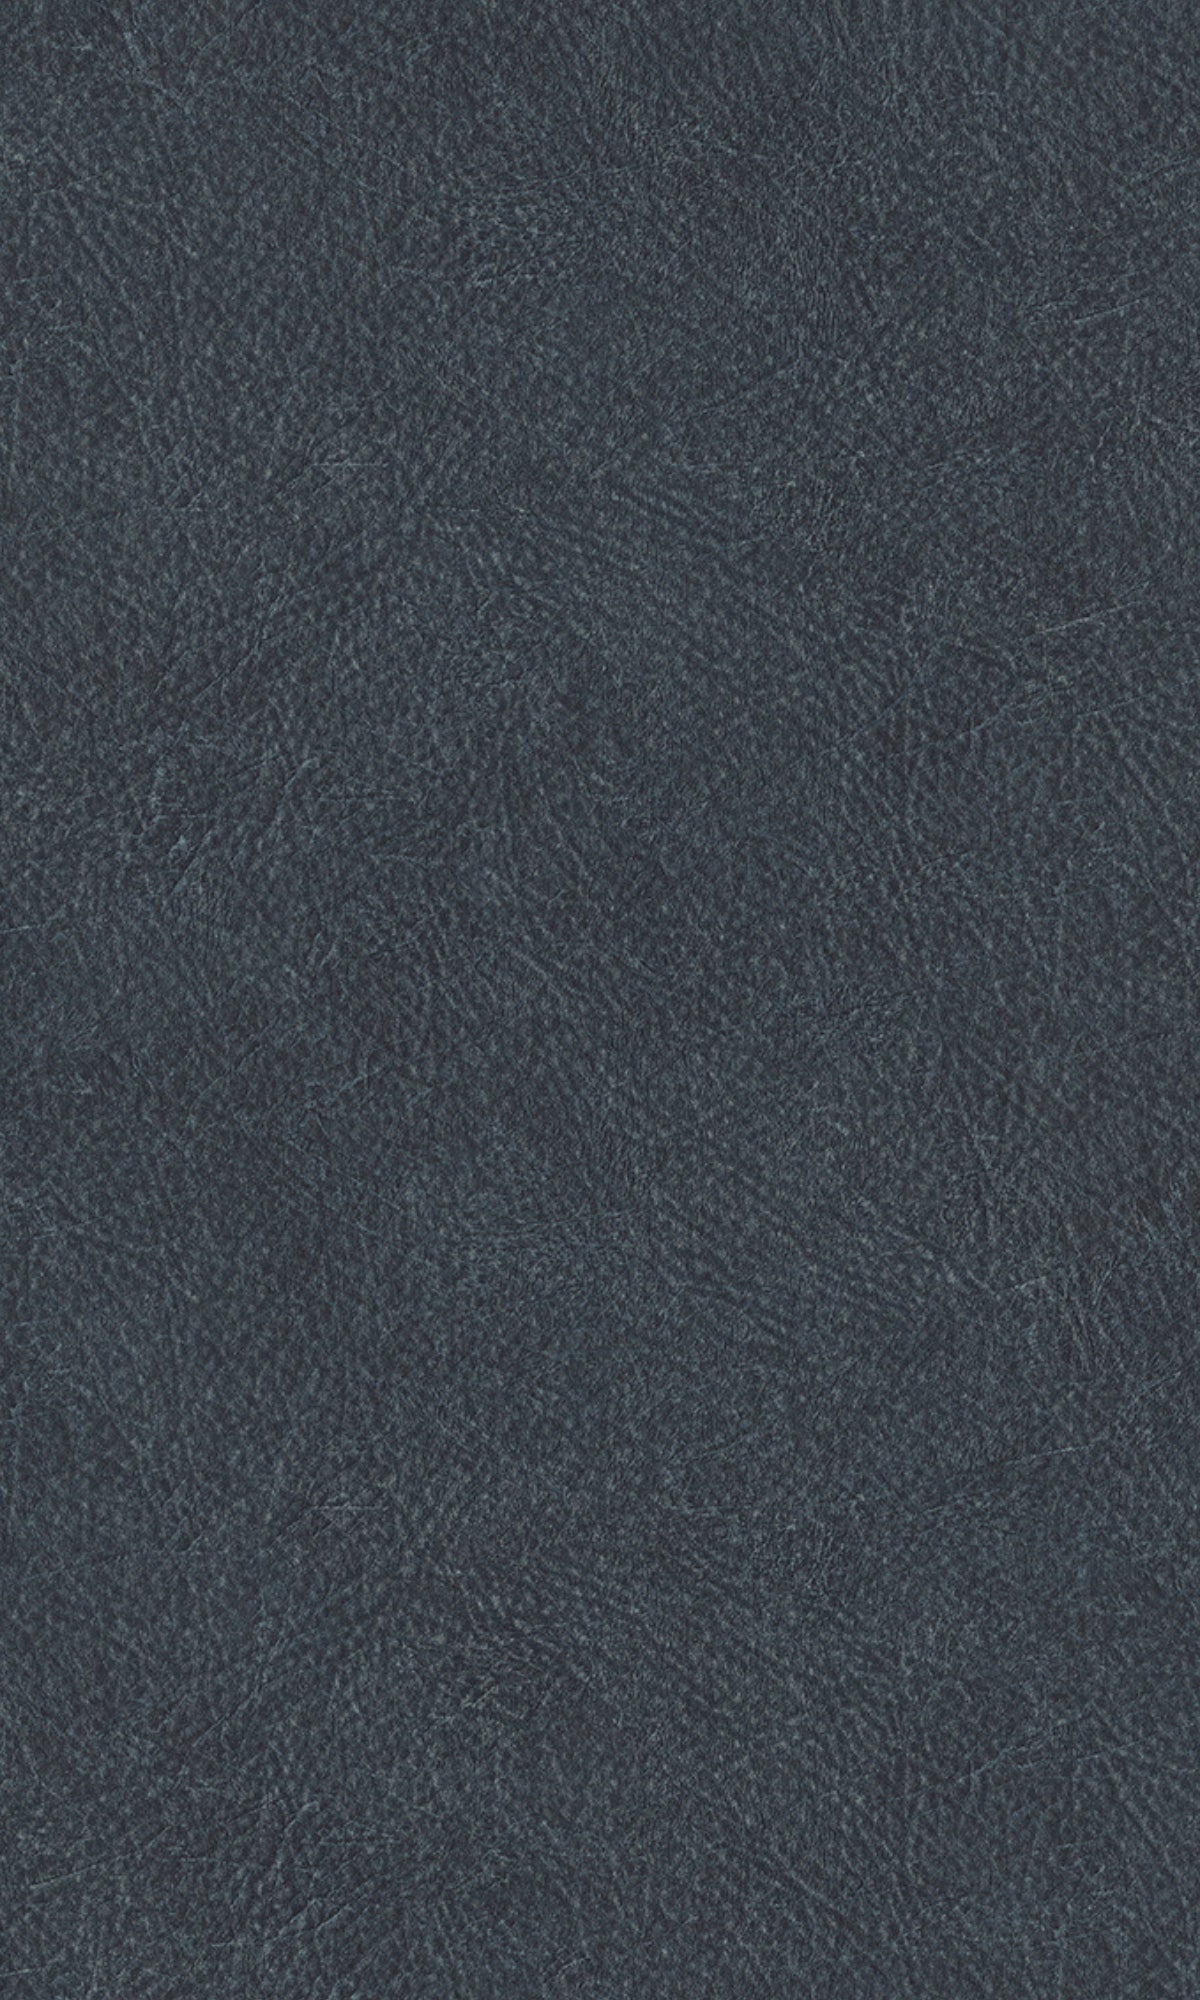 Navy Blue Plain Leather Textured Wallpaper R8219